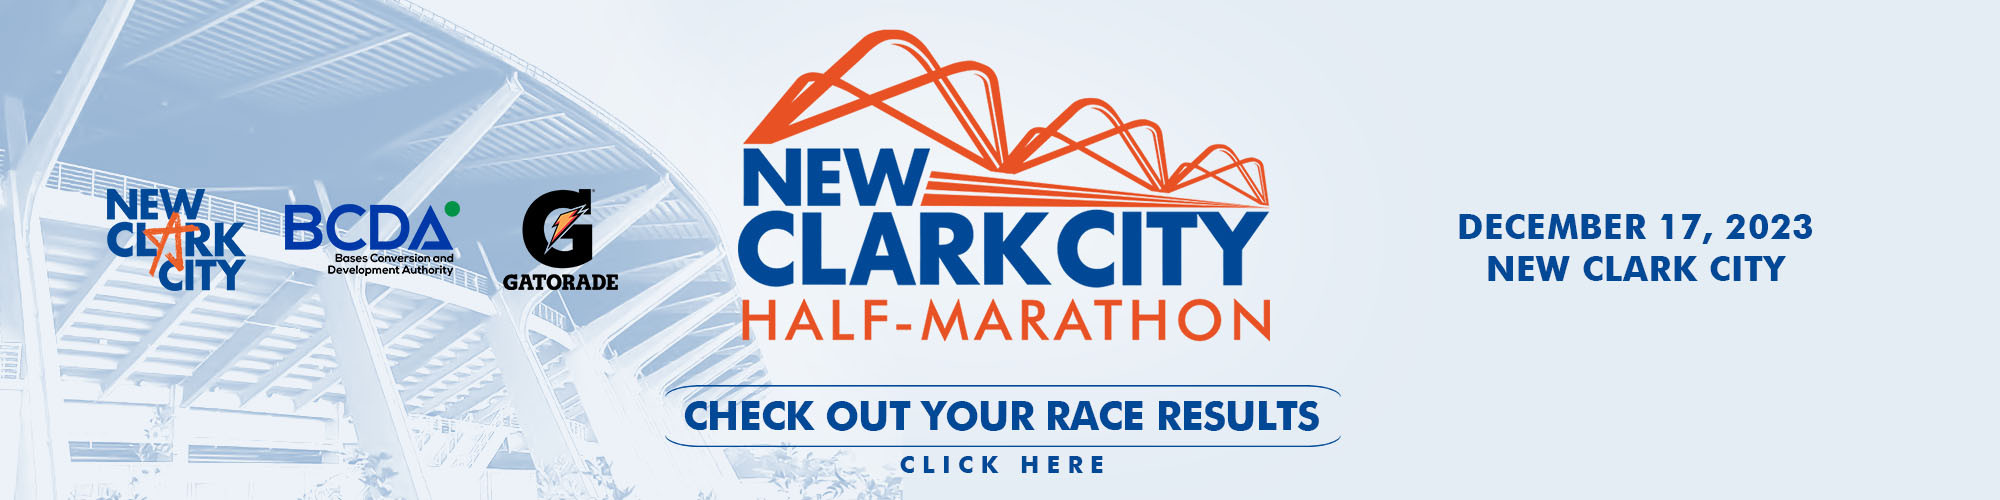 RUNRIO New Clark City Half Marathon